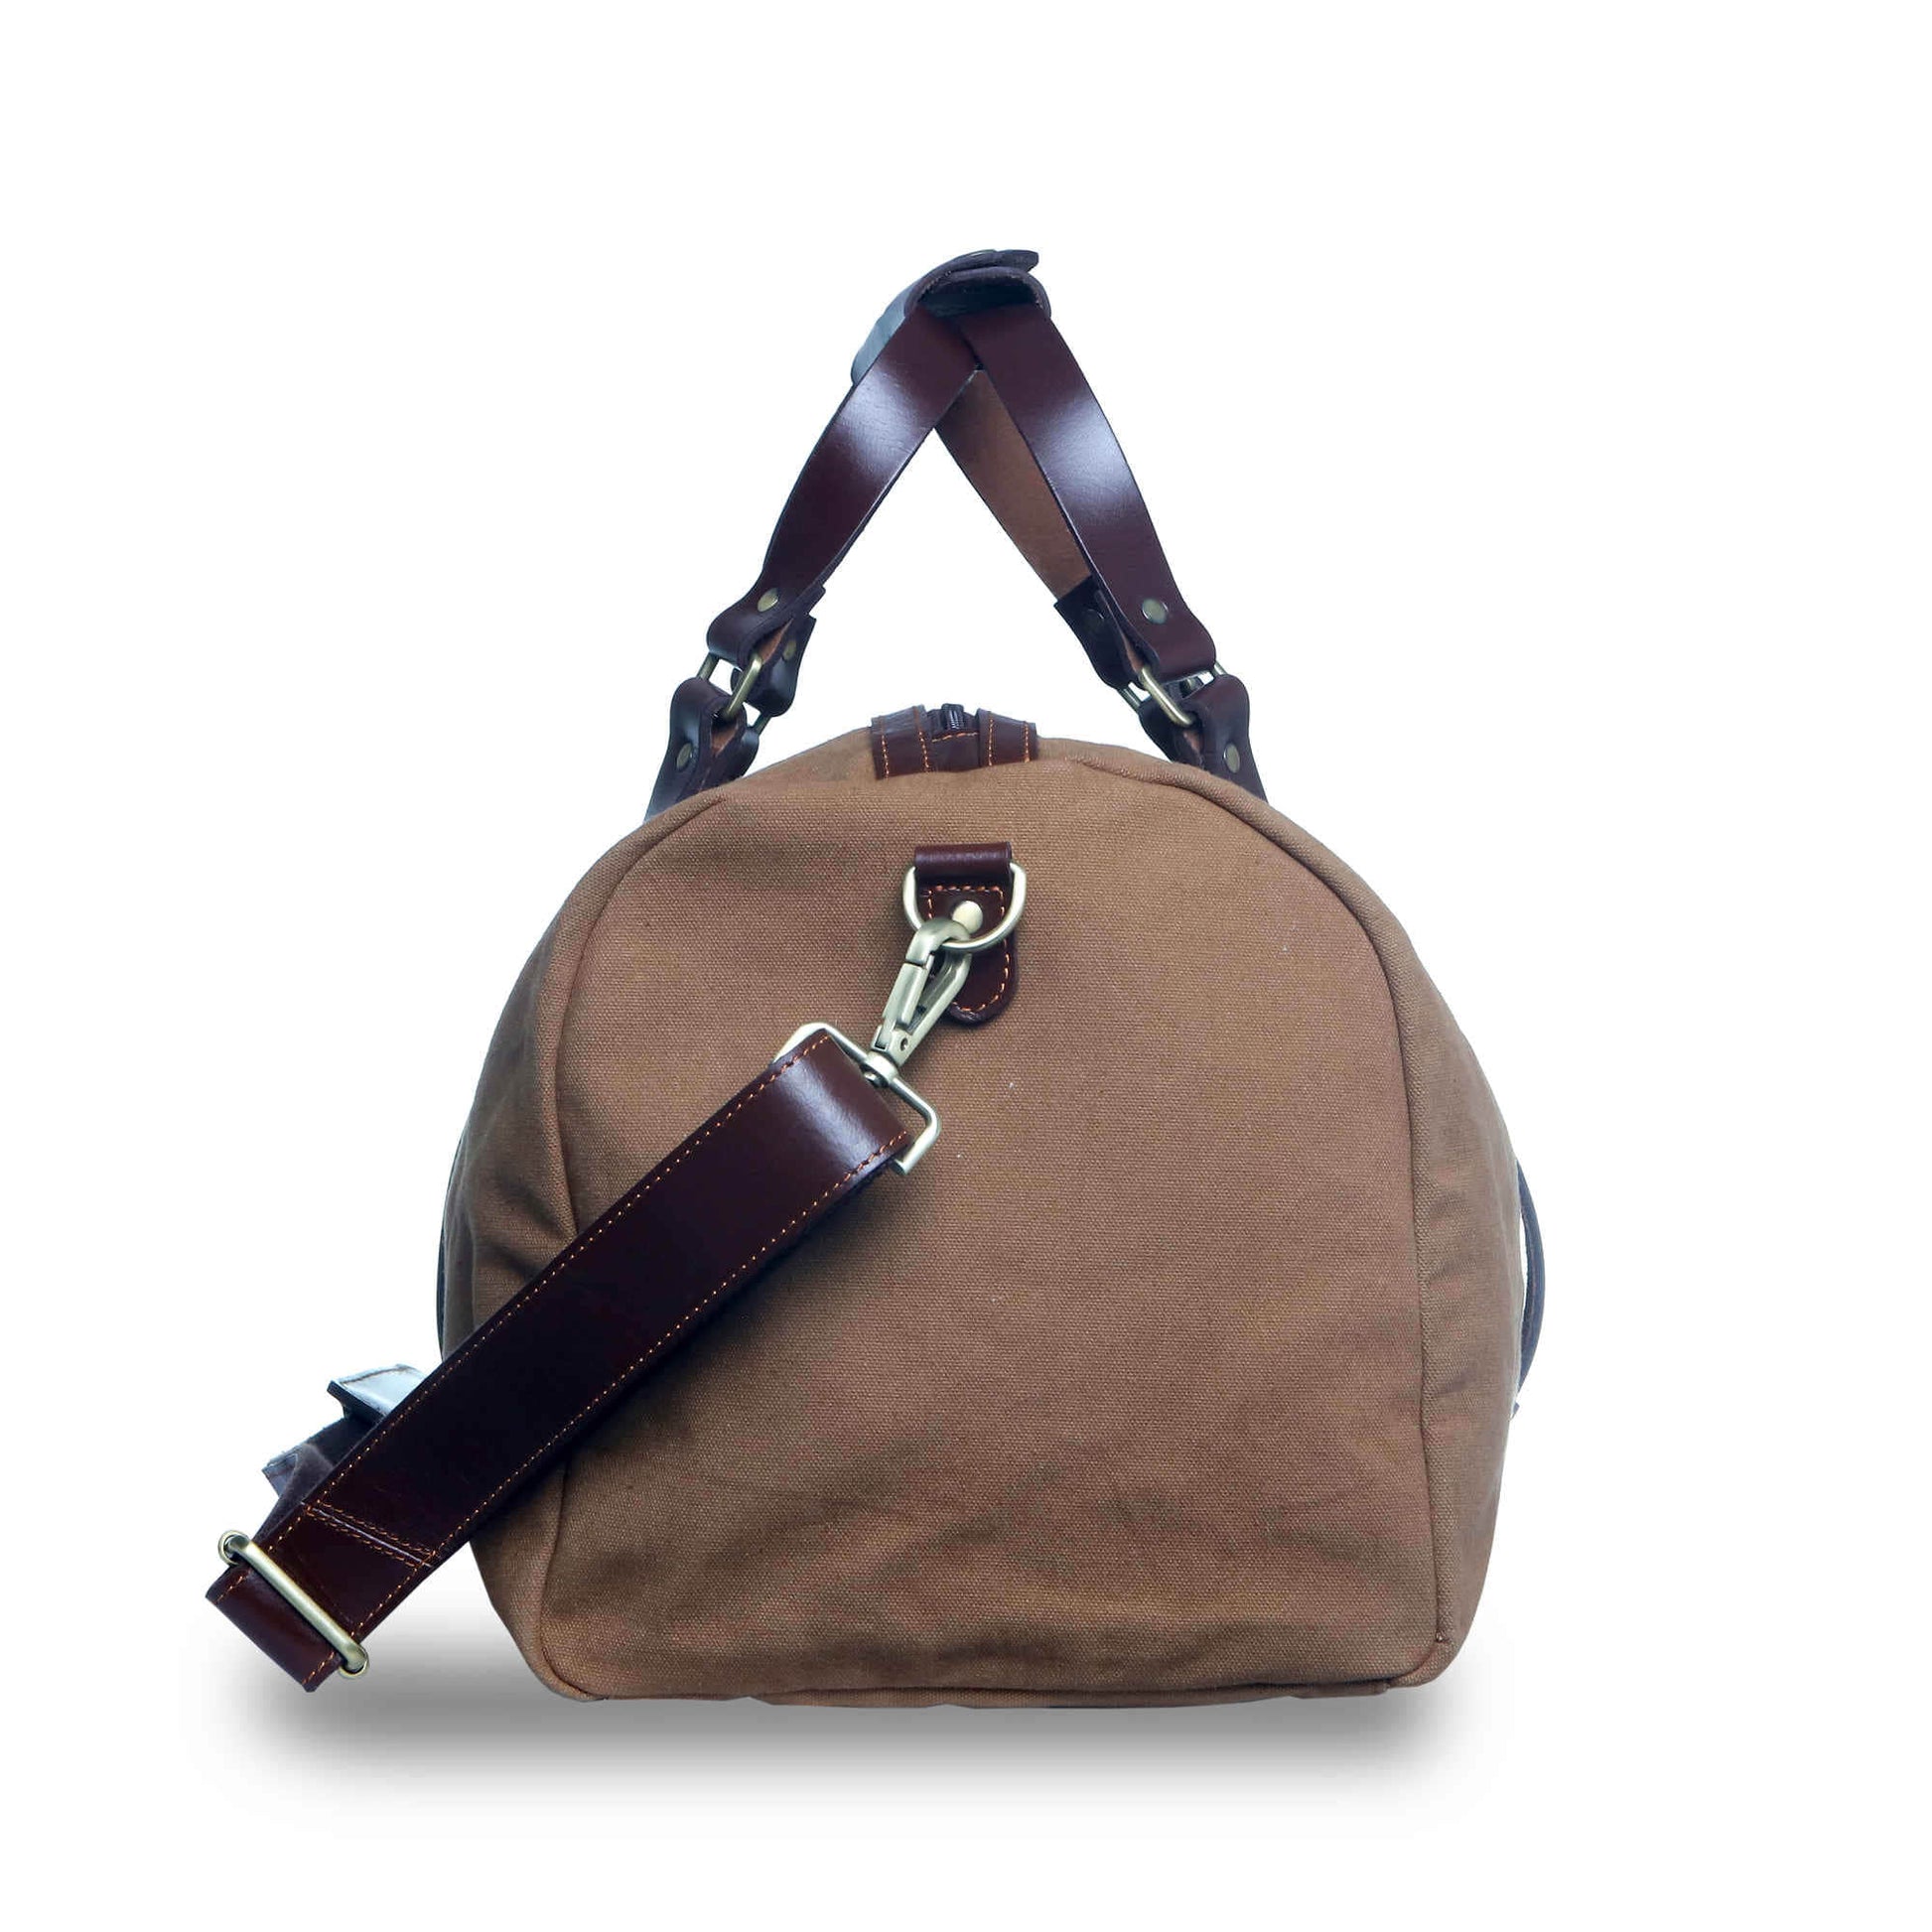 Style n Craft 397101 Duffle Bag in Waterproof Brown Canvas & Full Grain Leather - Side View